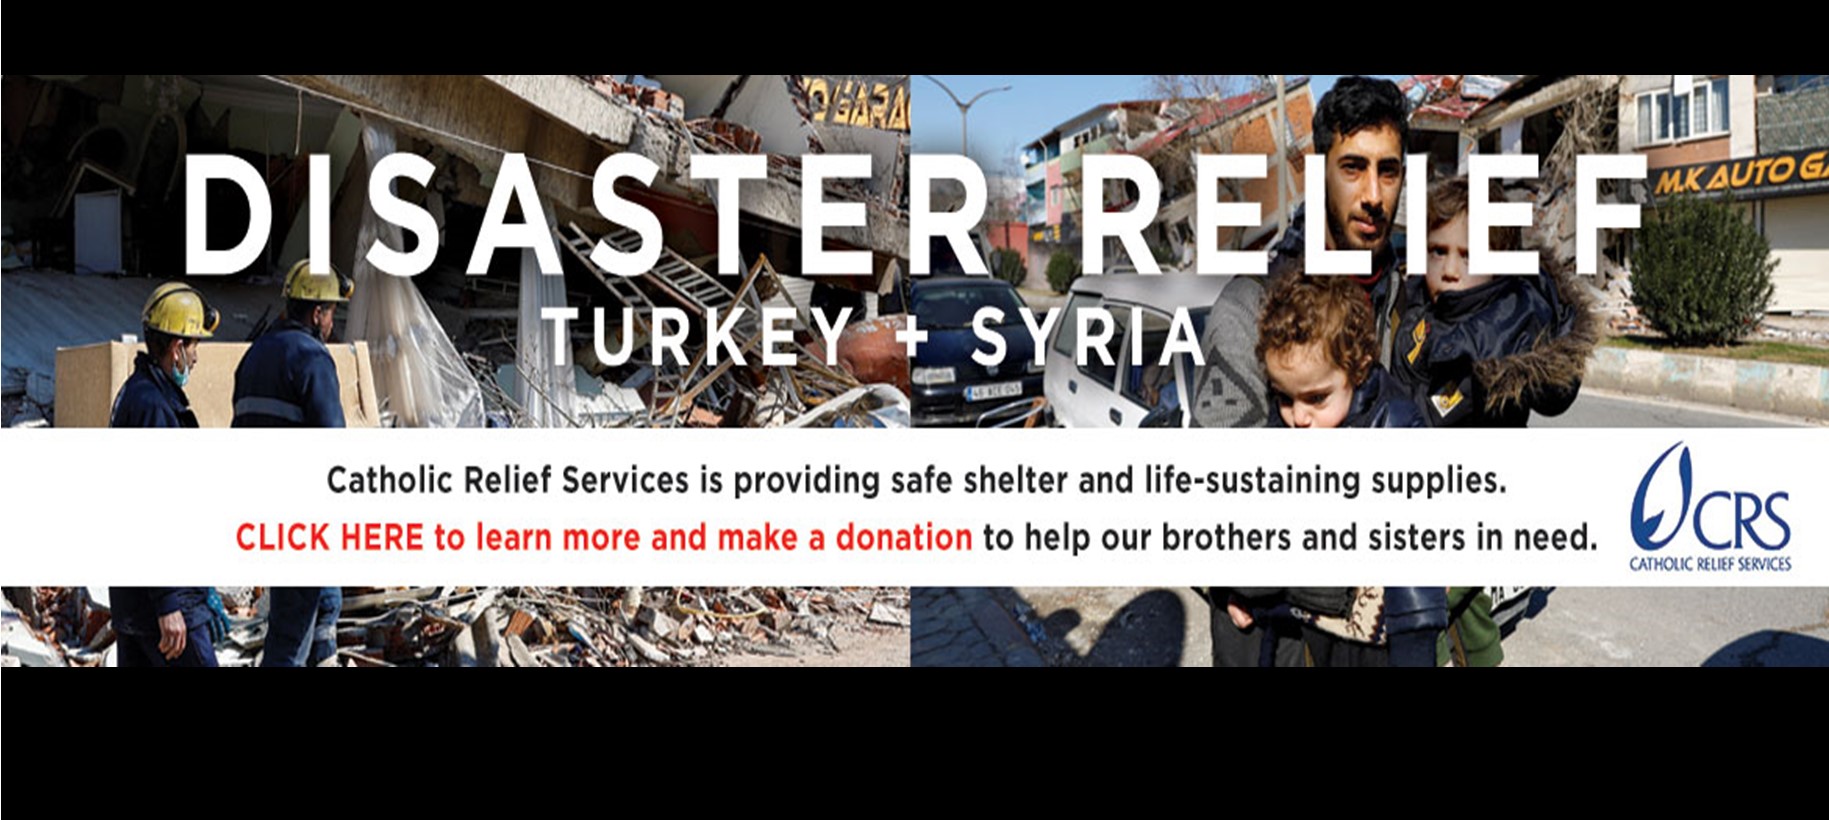 Earthquake relief in Syria & Turkey